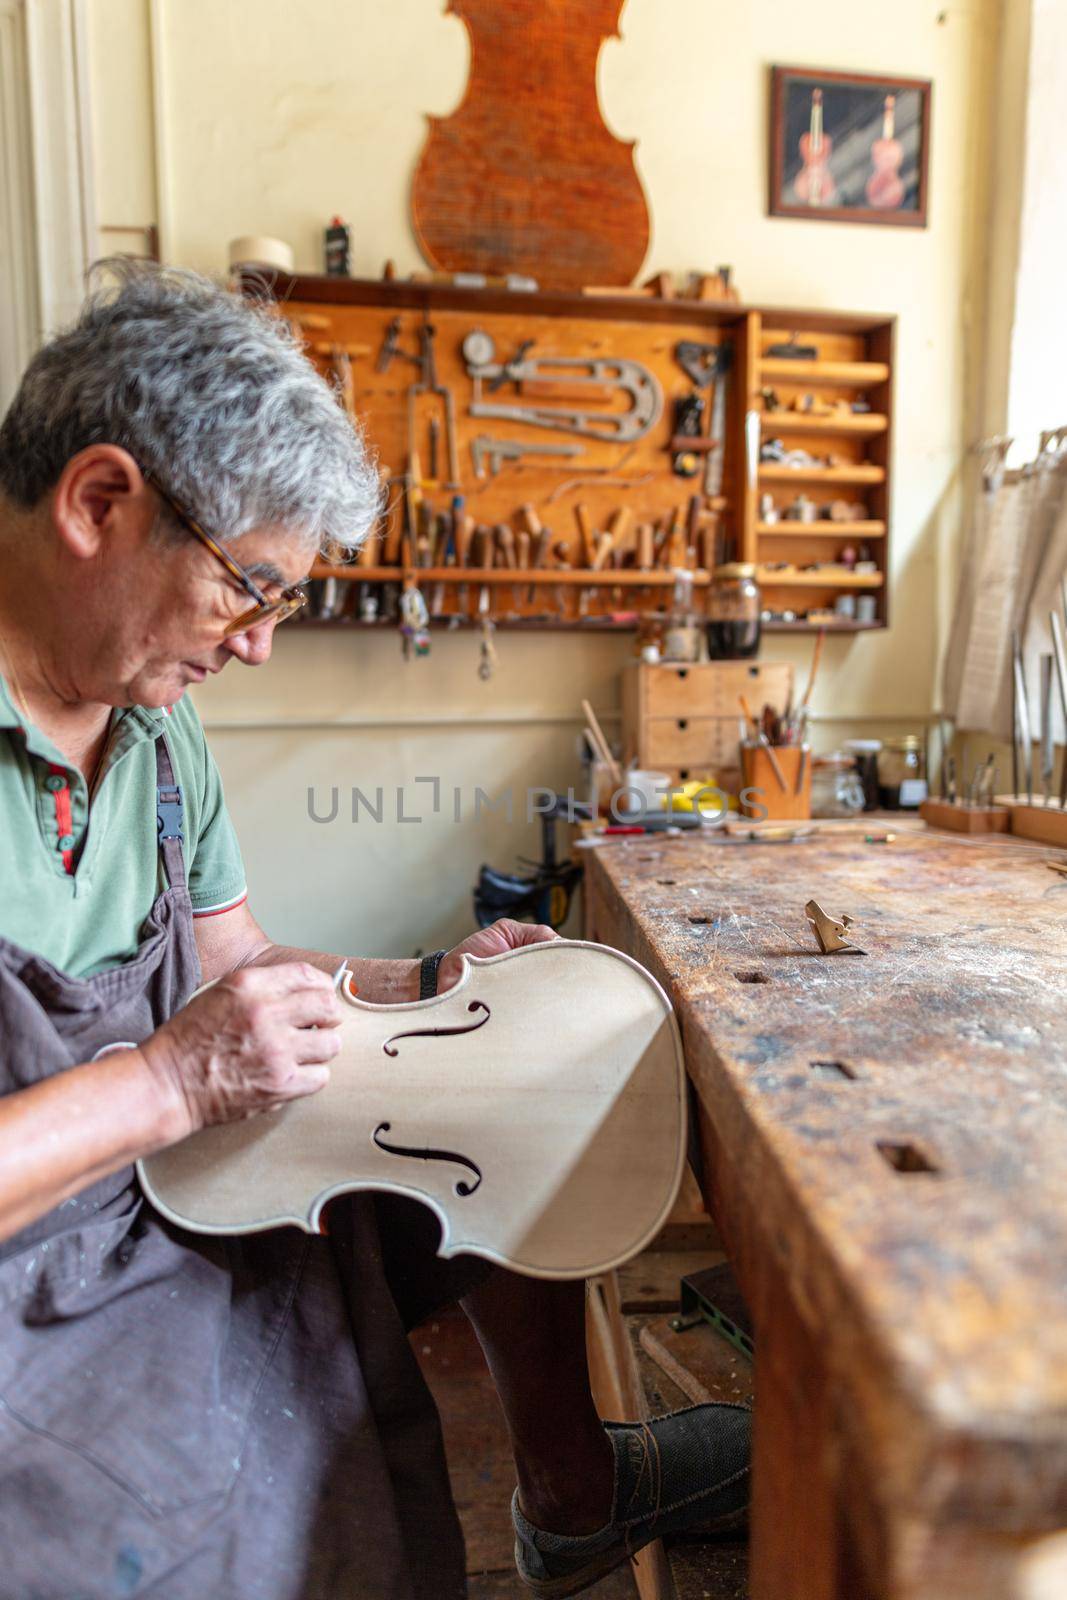 violinmaker at work in his italian workshop